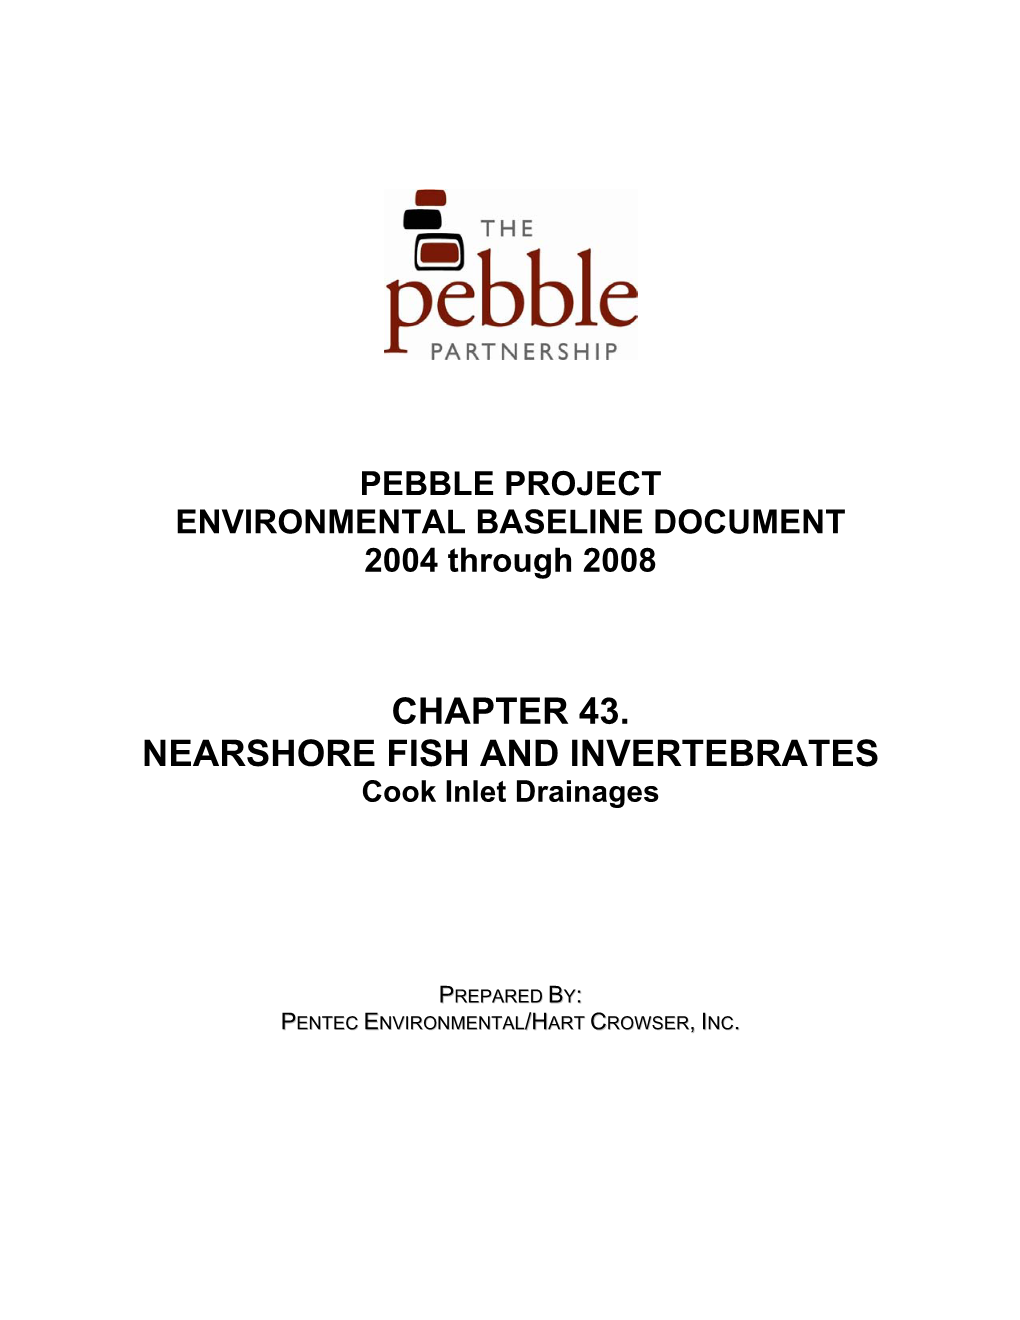 Chapter 43: Nearshore Fish and Invertebrates